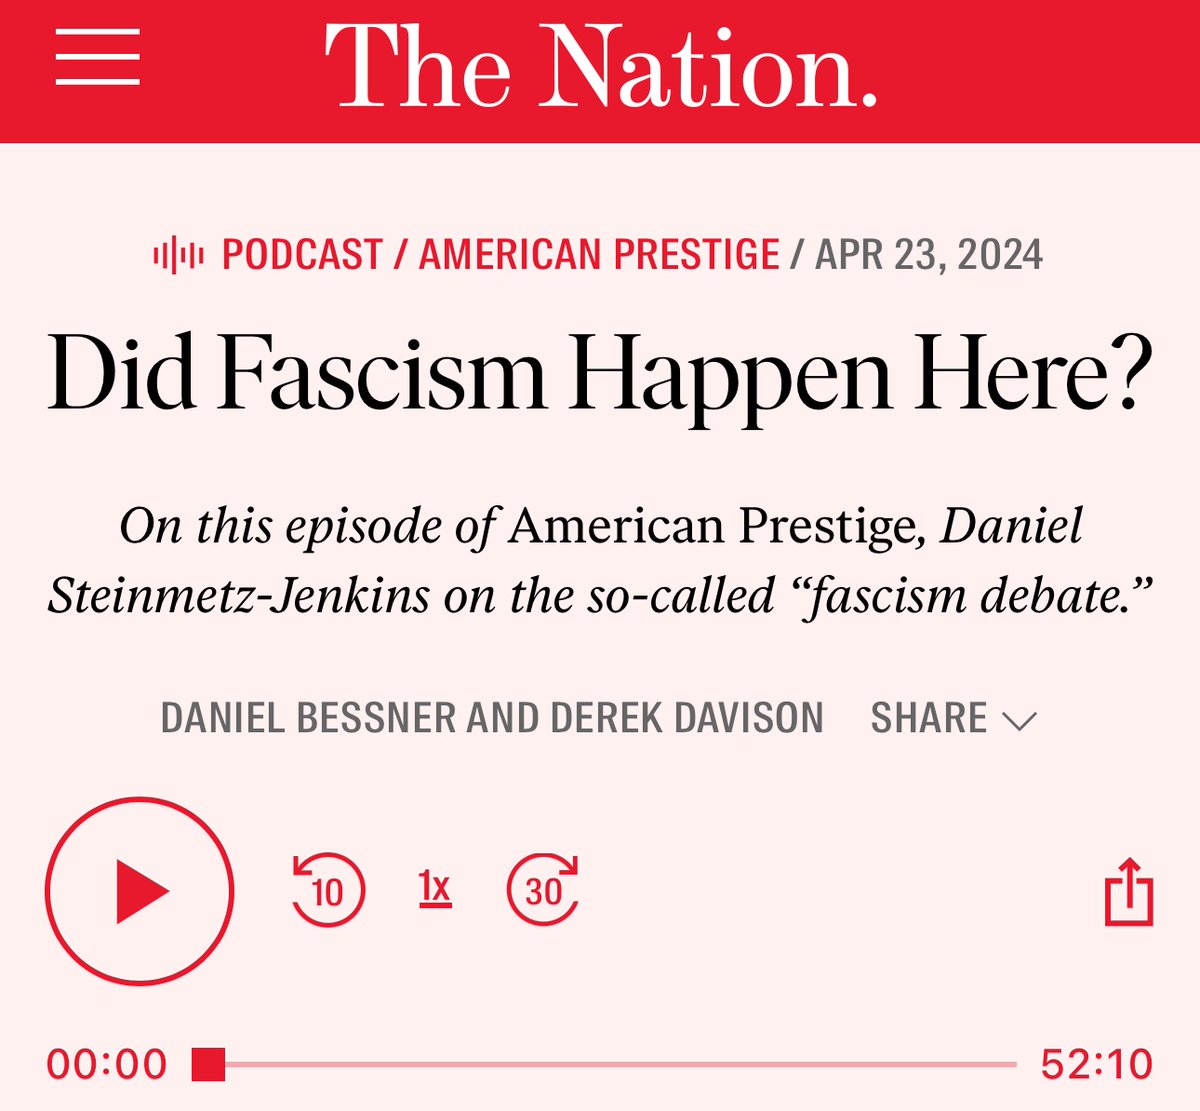 Many thanks to Danny Bessner/@dbessner and Derek Davison/@dwdavison for interviewing on the American Prestige podcast thenation.com/podcast/politi…